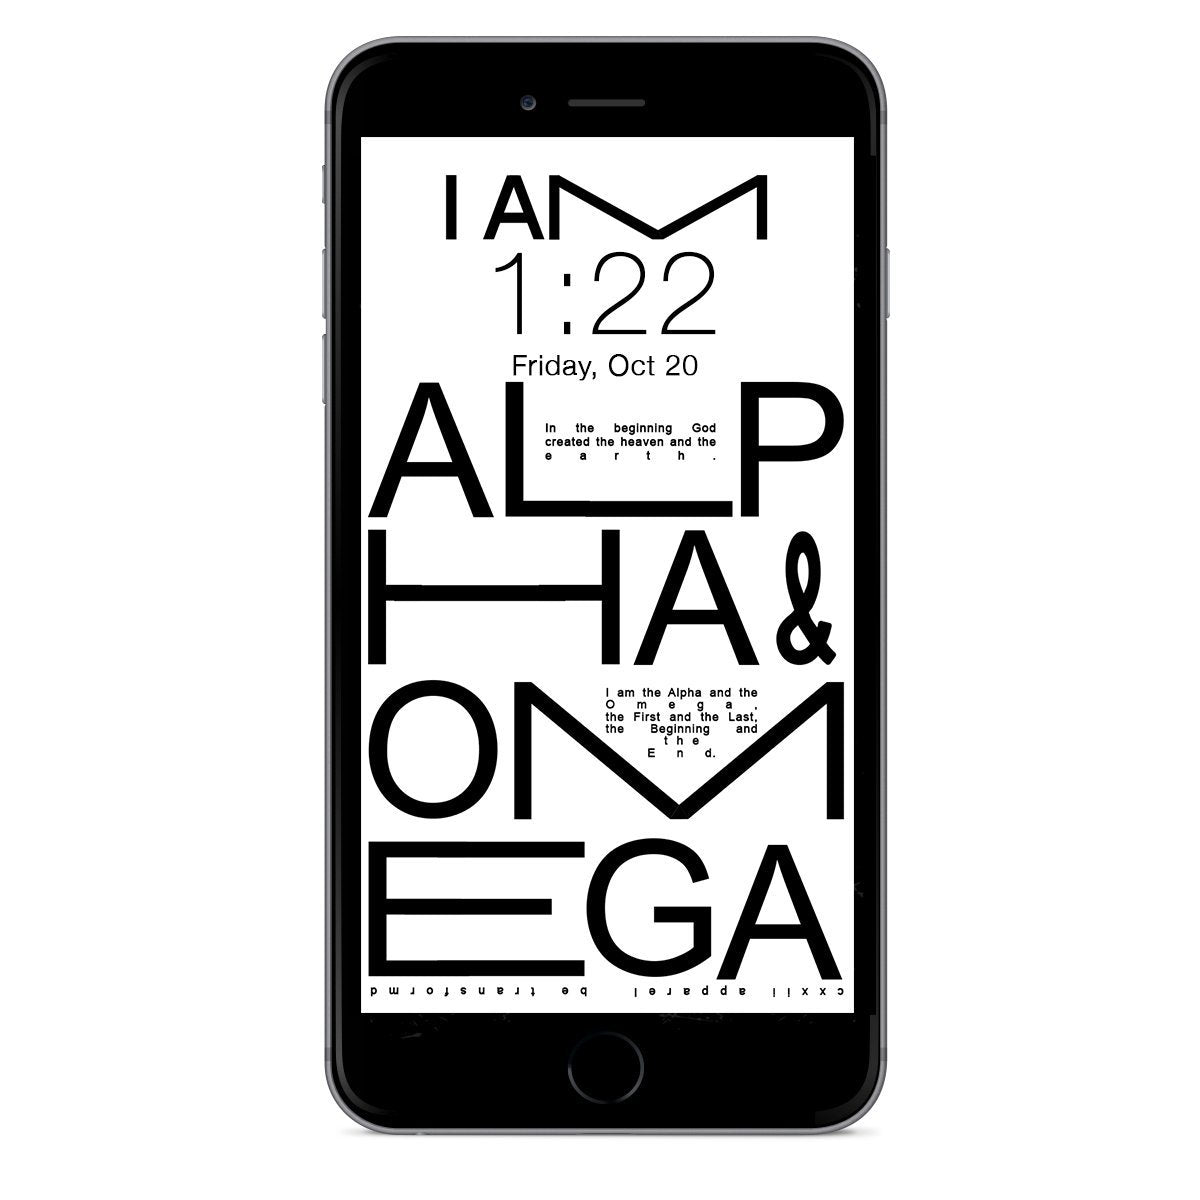 CXXII "Alpha & Omega" Phone Wallpaper